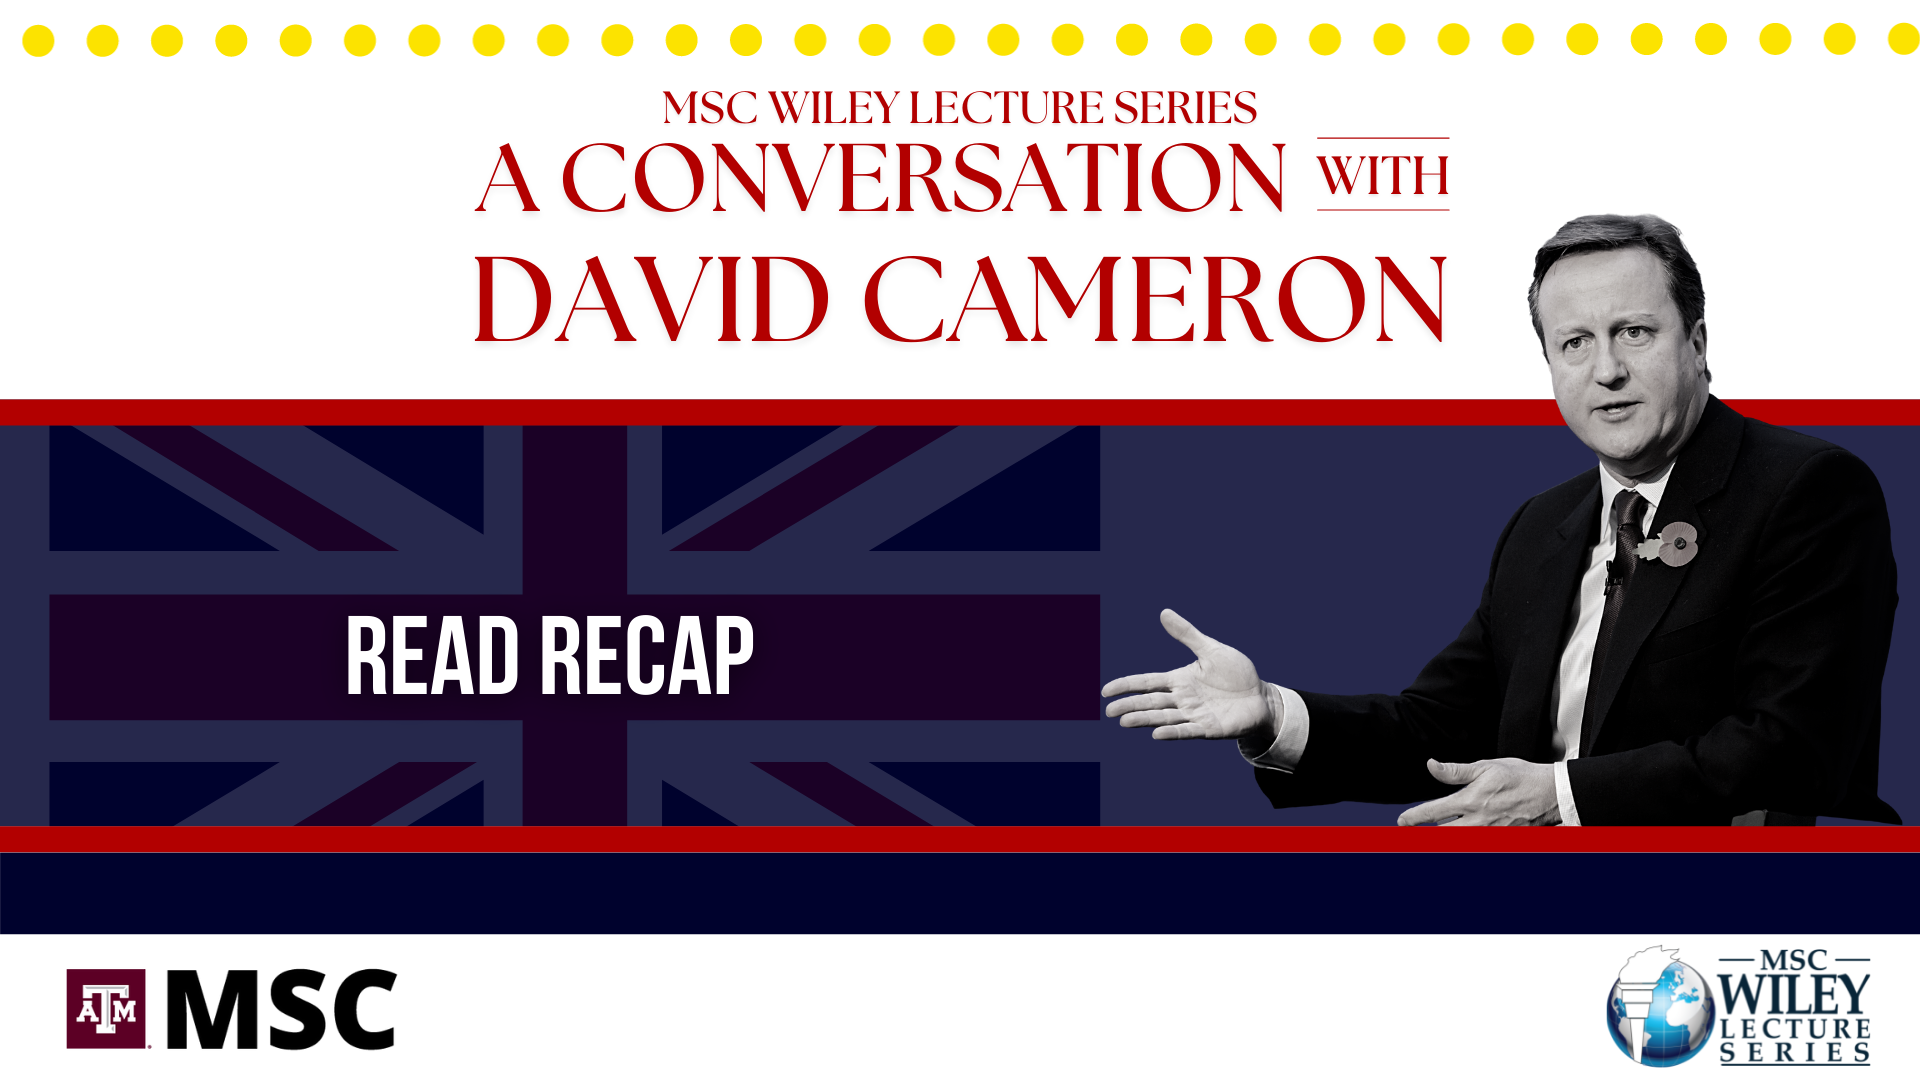 MSC Wiley Lecture Series presents A Conversation with David Cameron, Read Recap